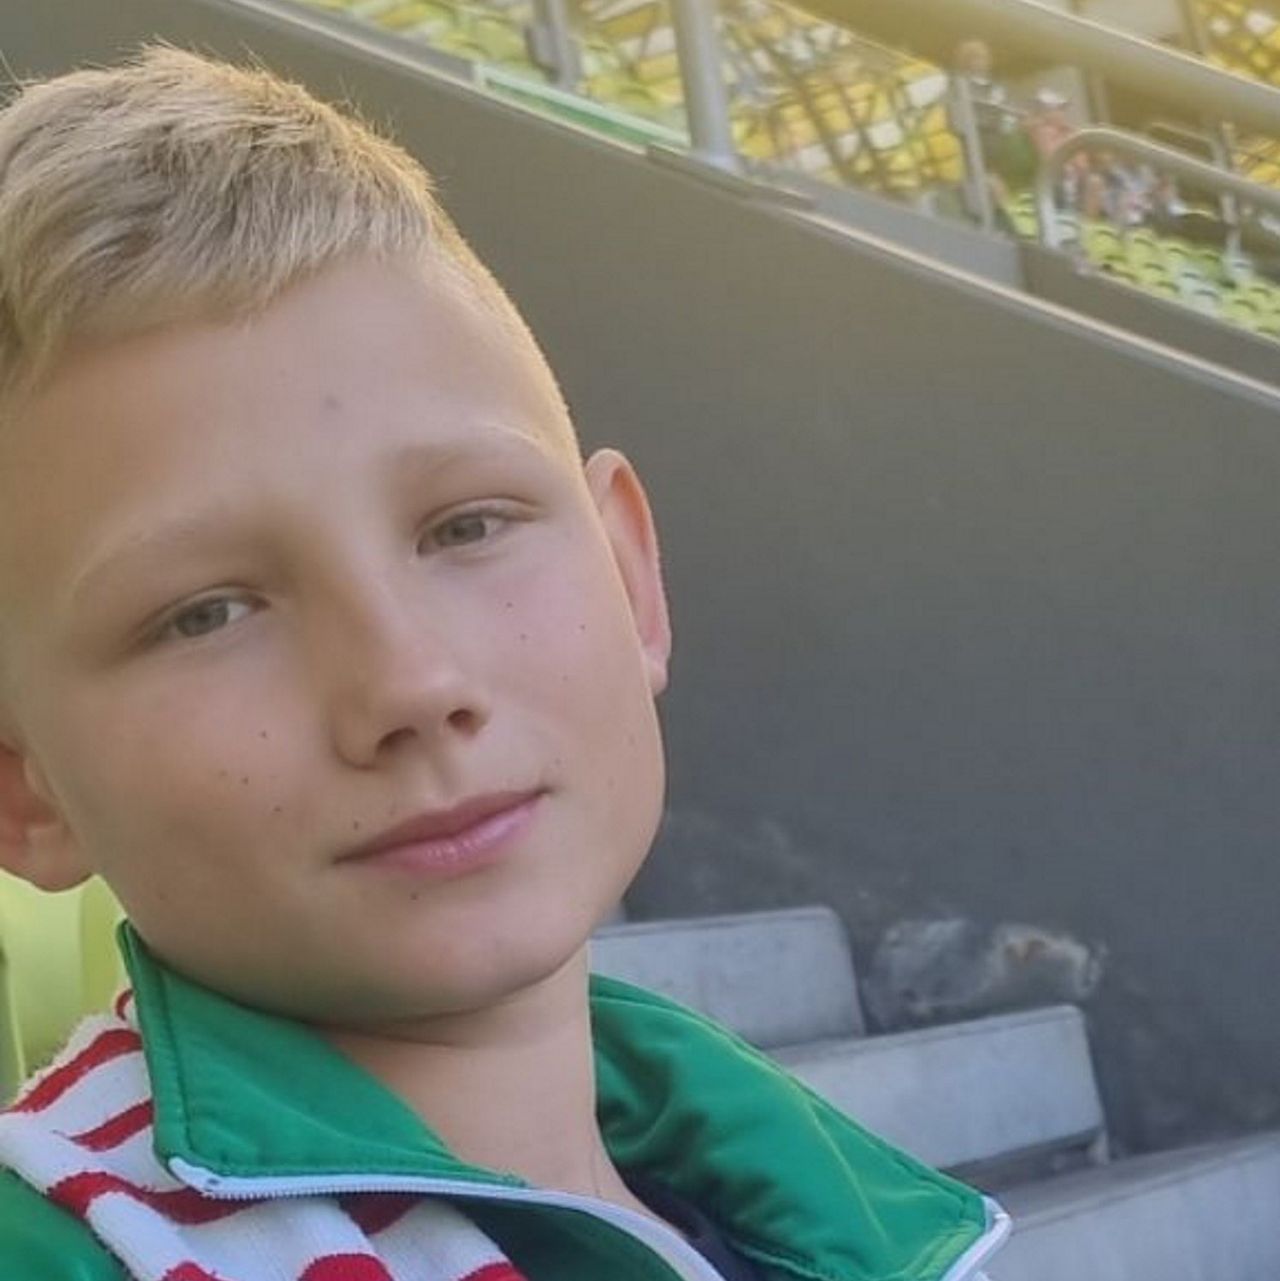 Zaginął 12-letni Olivier Suski. Apel policji